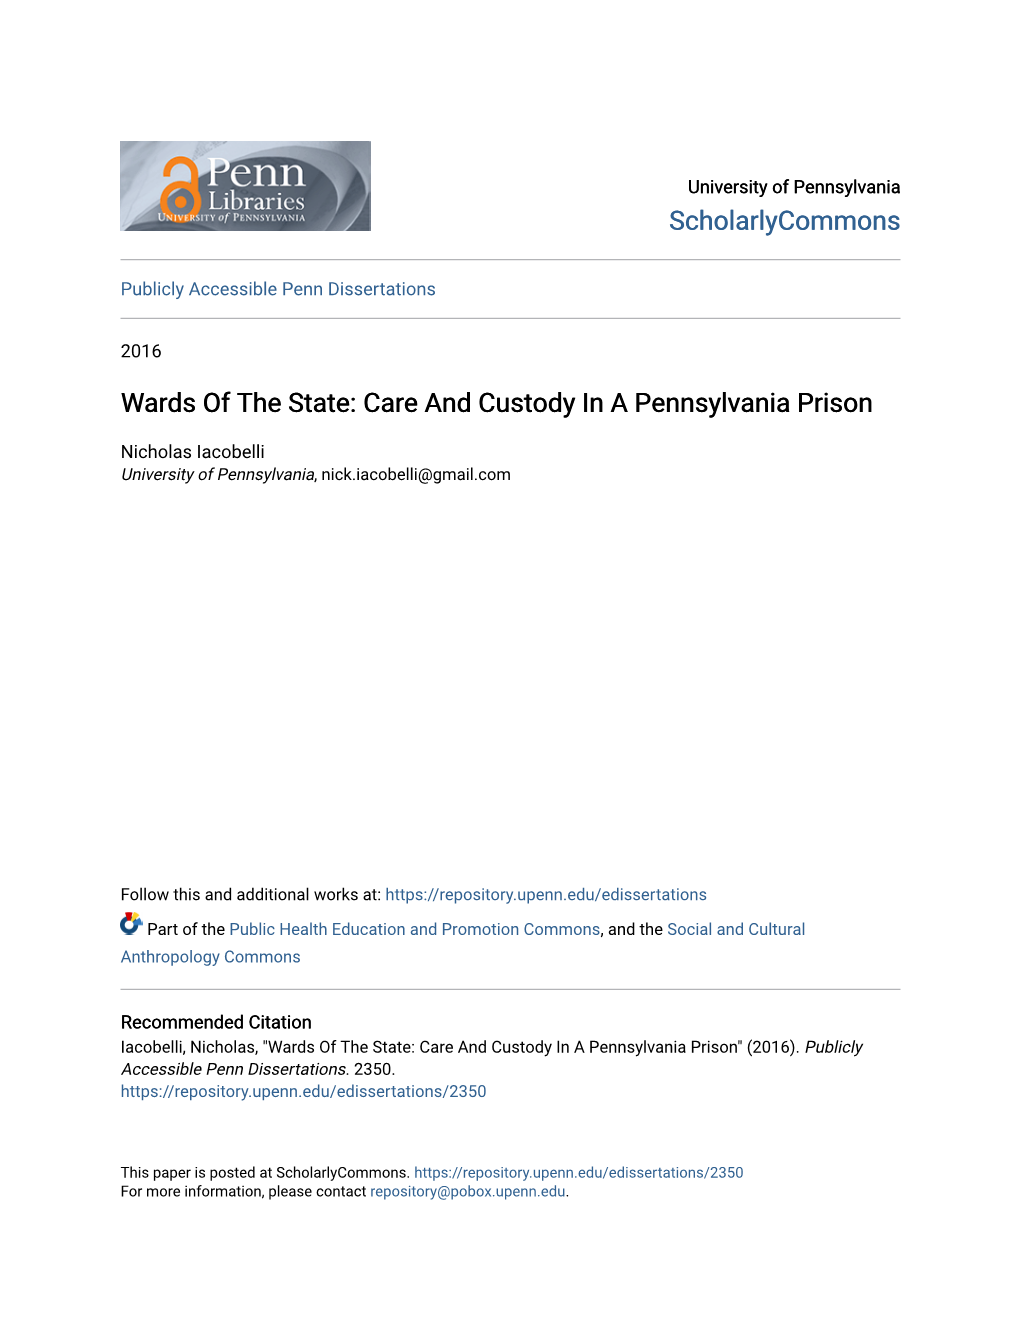 Care and Custody in a Pennsylvania Prison